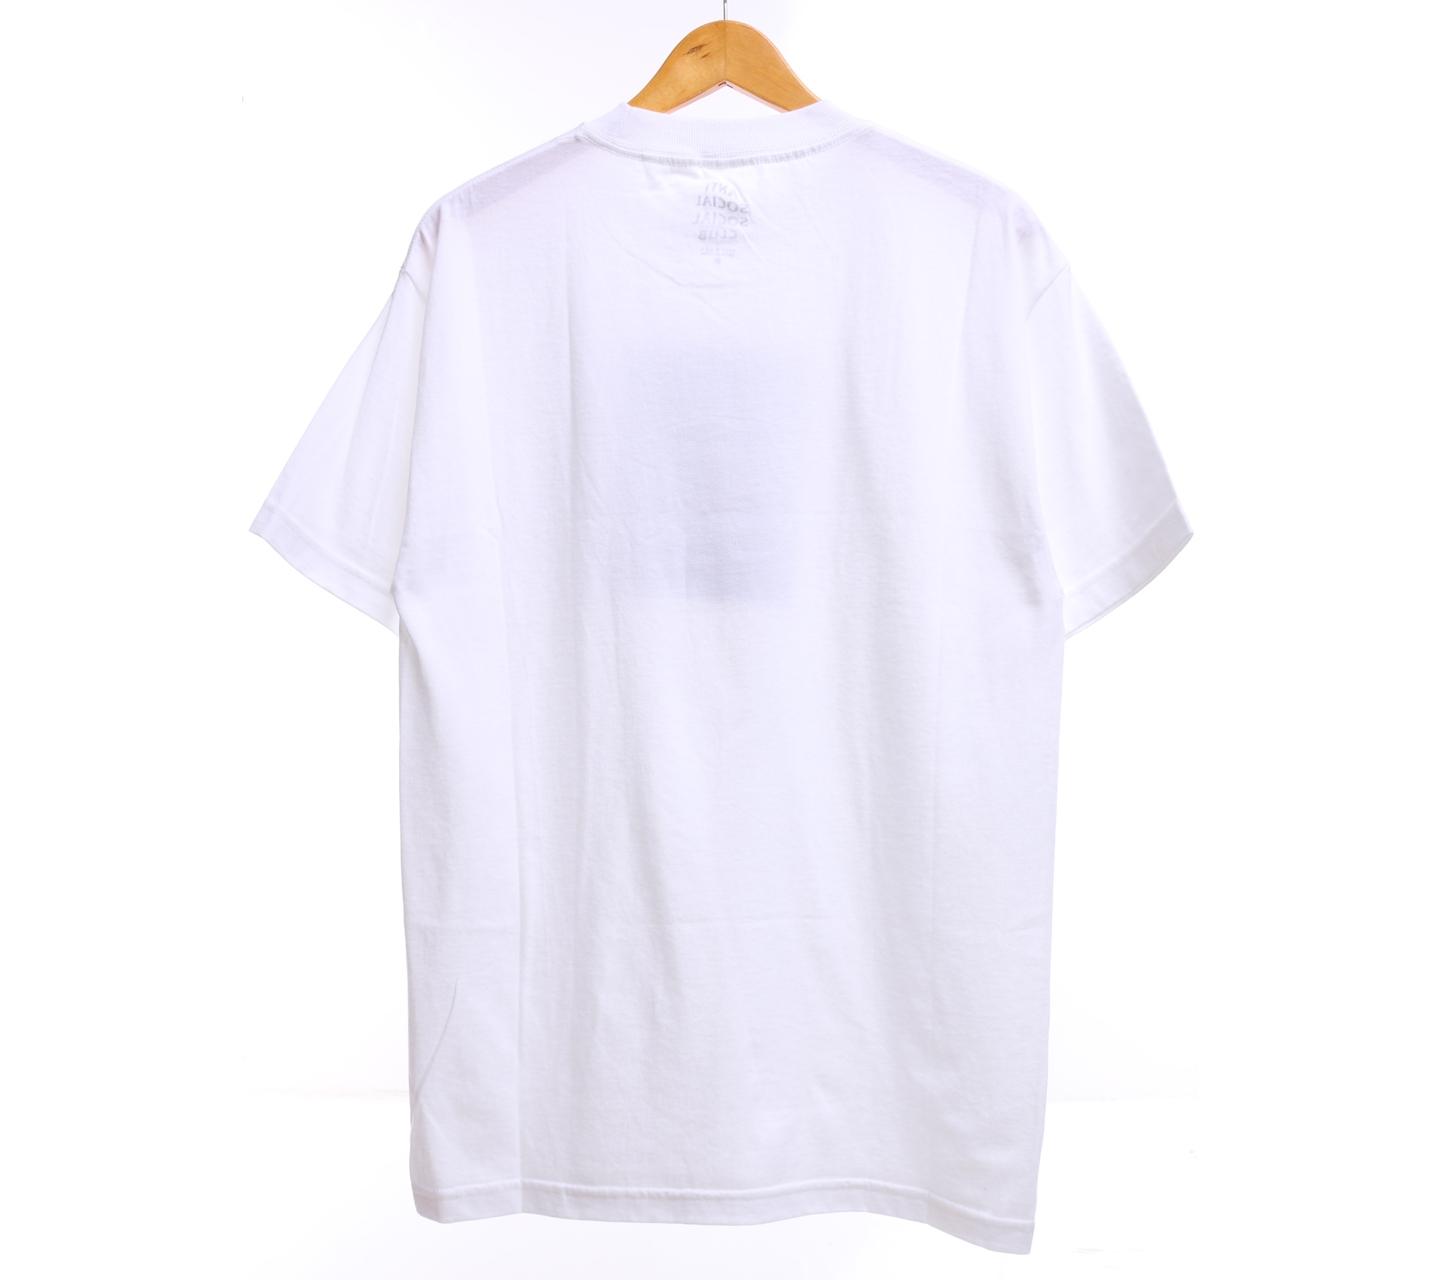 Anti social social club Tee White T-shirt